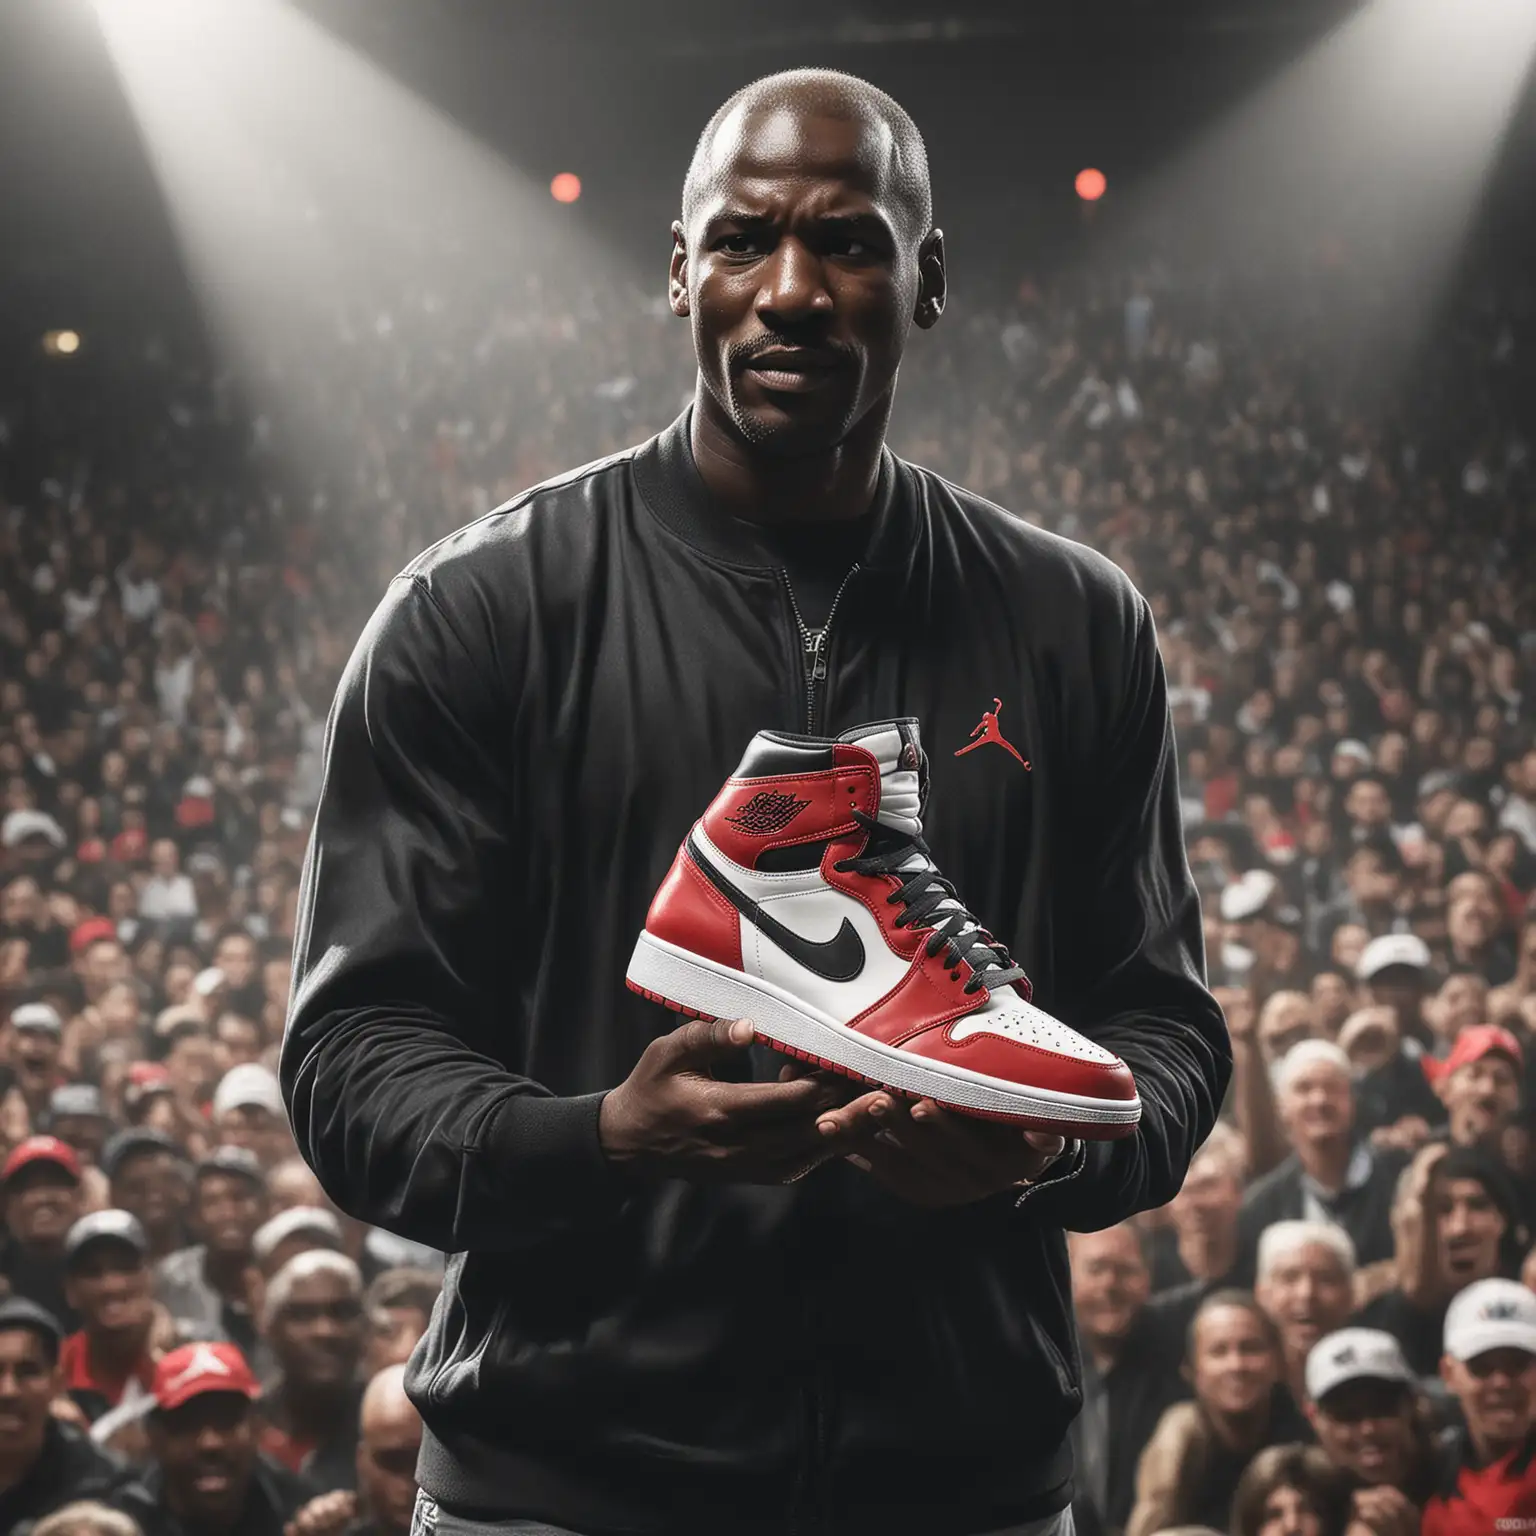 Michael Jordan with Air Jordan 1s in Intense Cinematic Lighting Amid Crowd